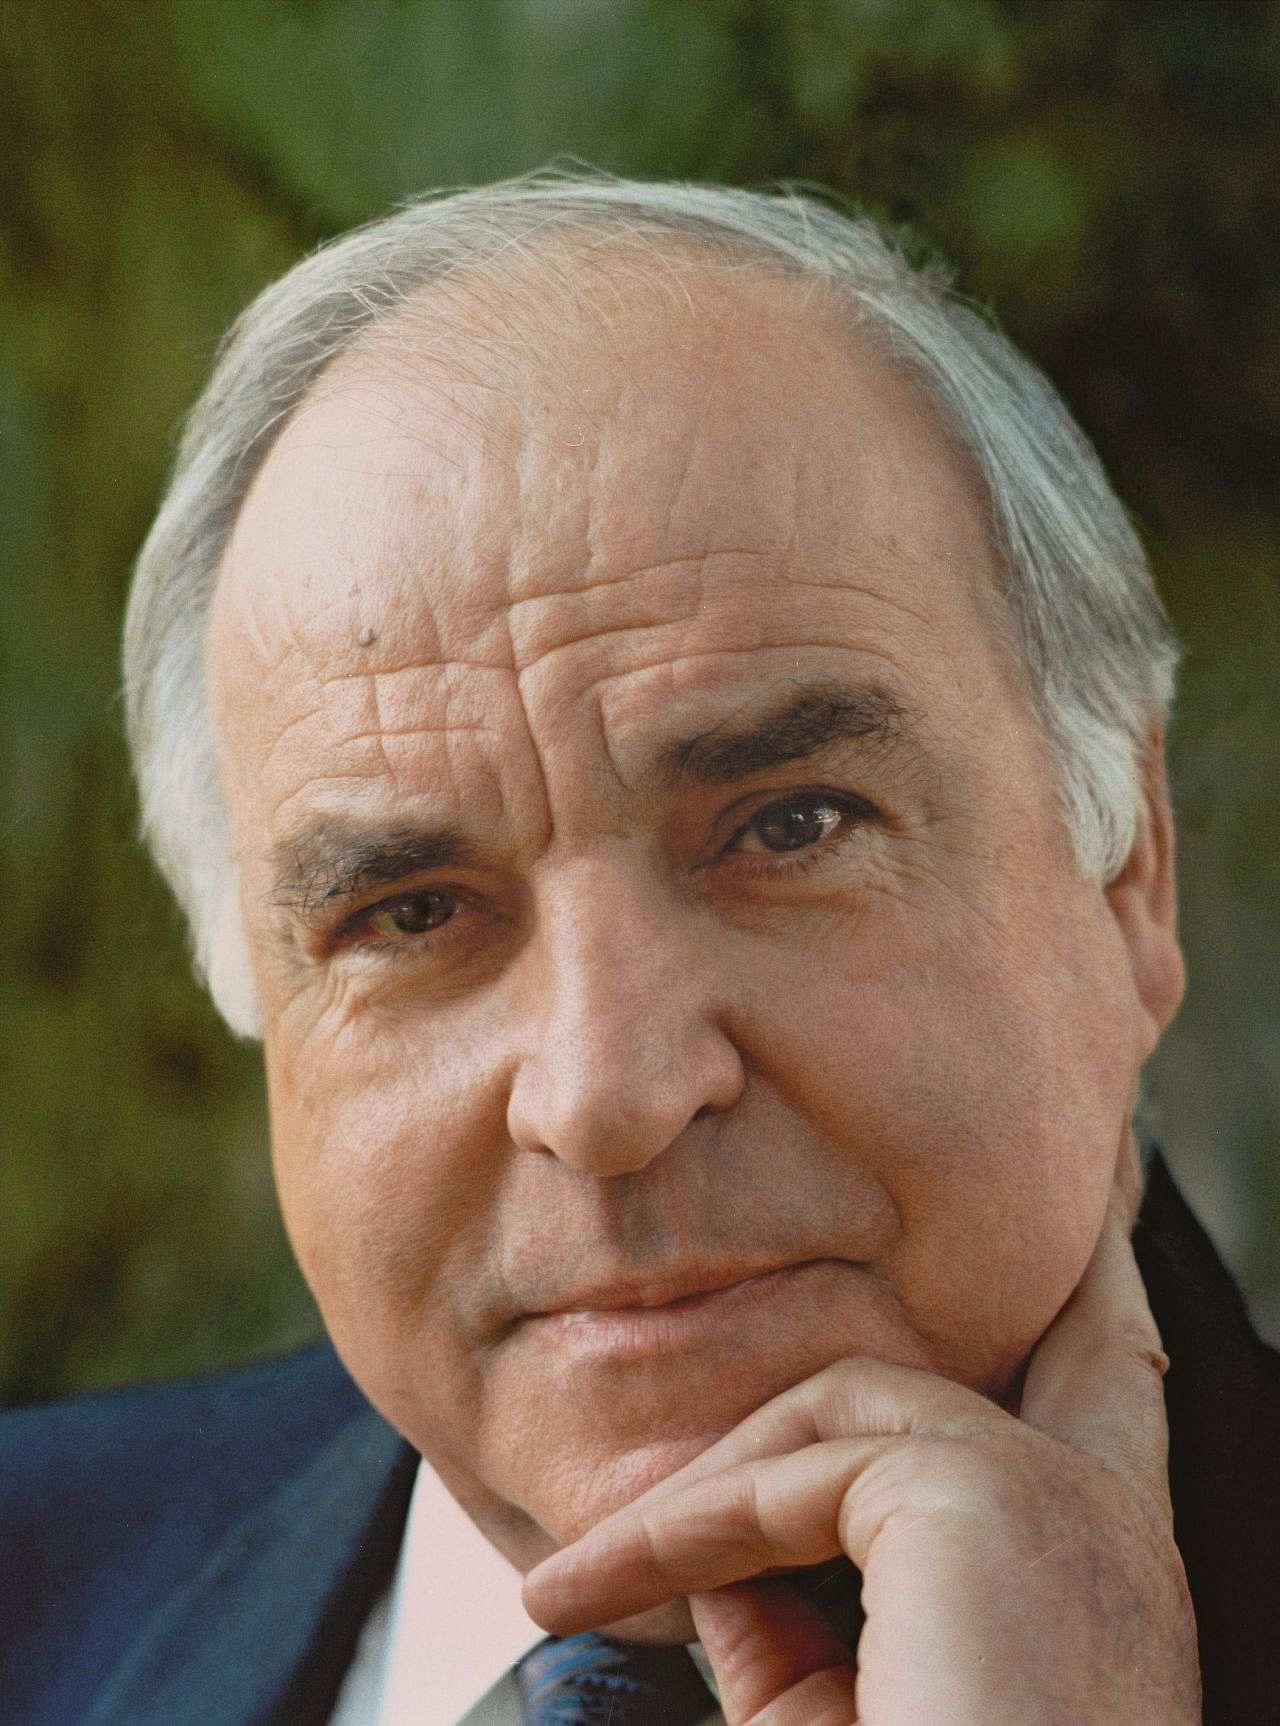 Porträtfoto von Bundeskanzler <b>Helmut Kohl</b>, 1996. - kohl-helmut_foto_LEMO-F-5-009_bbst